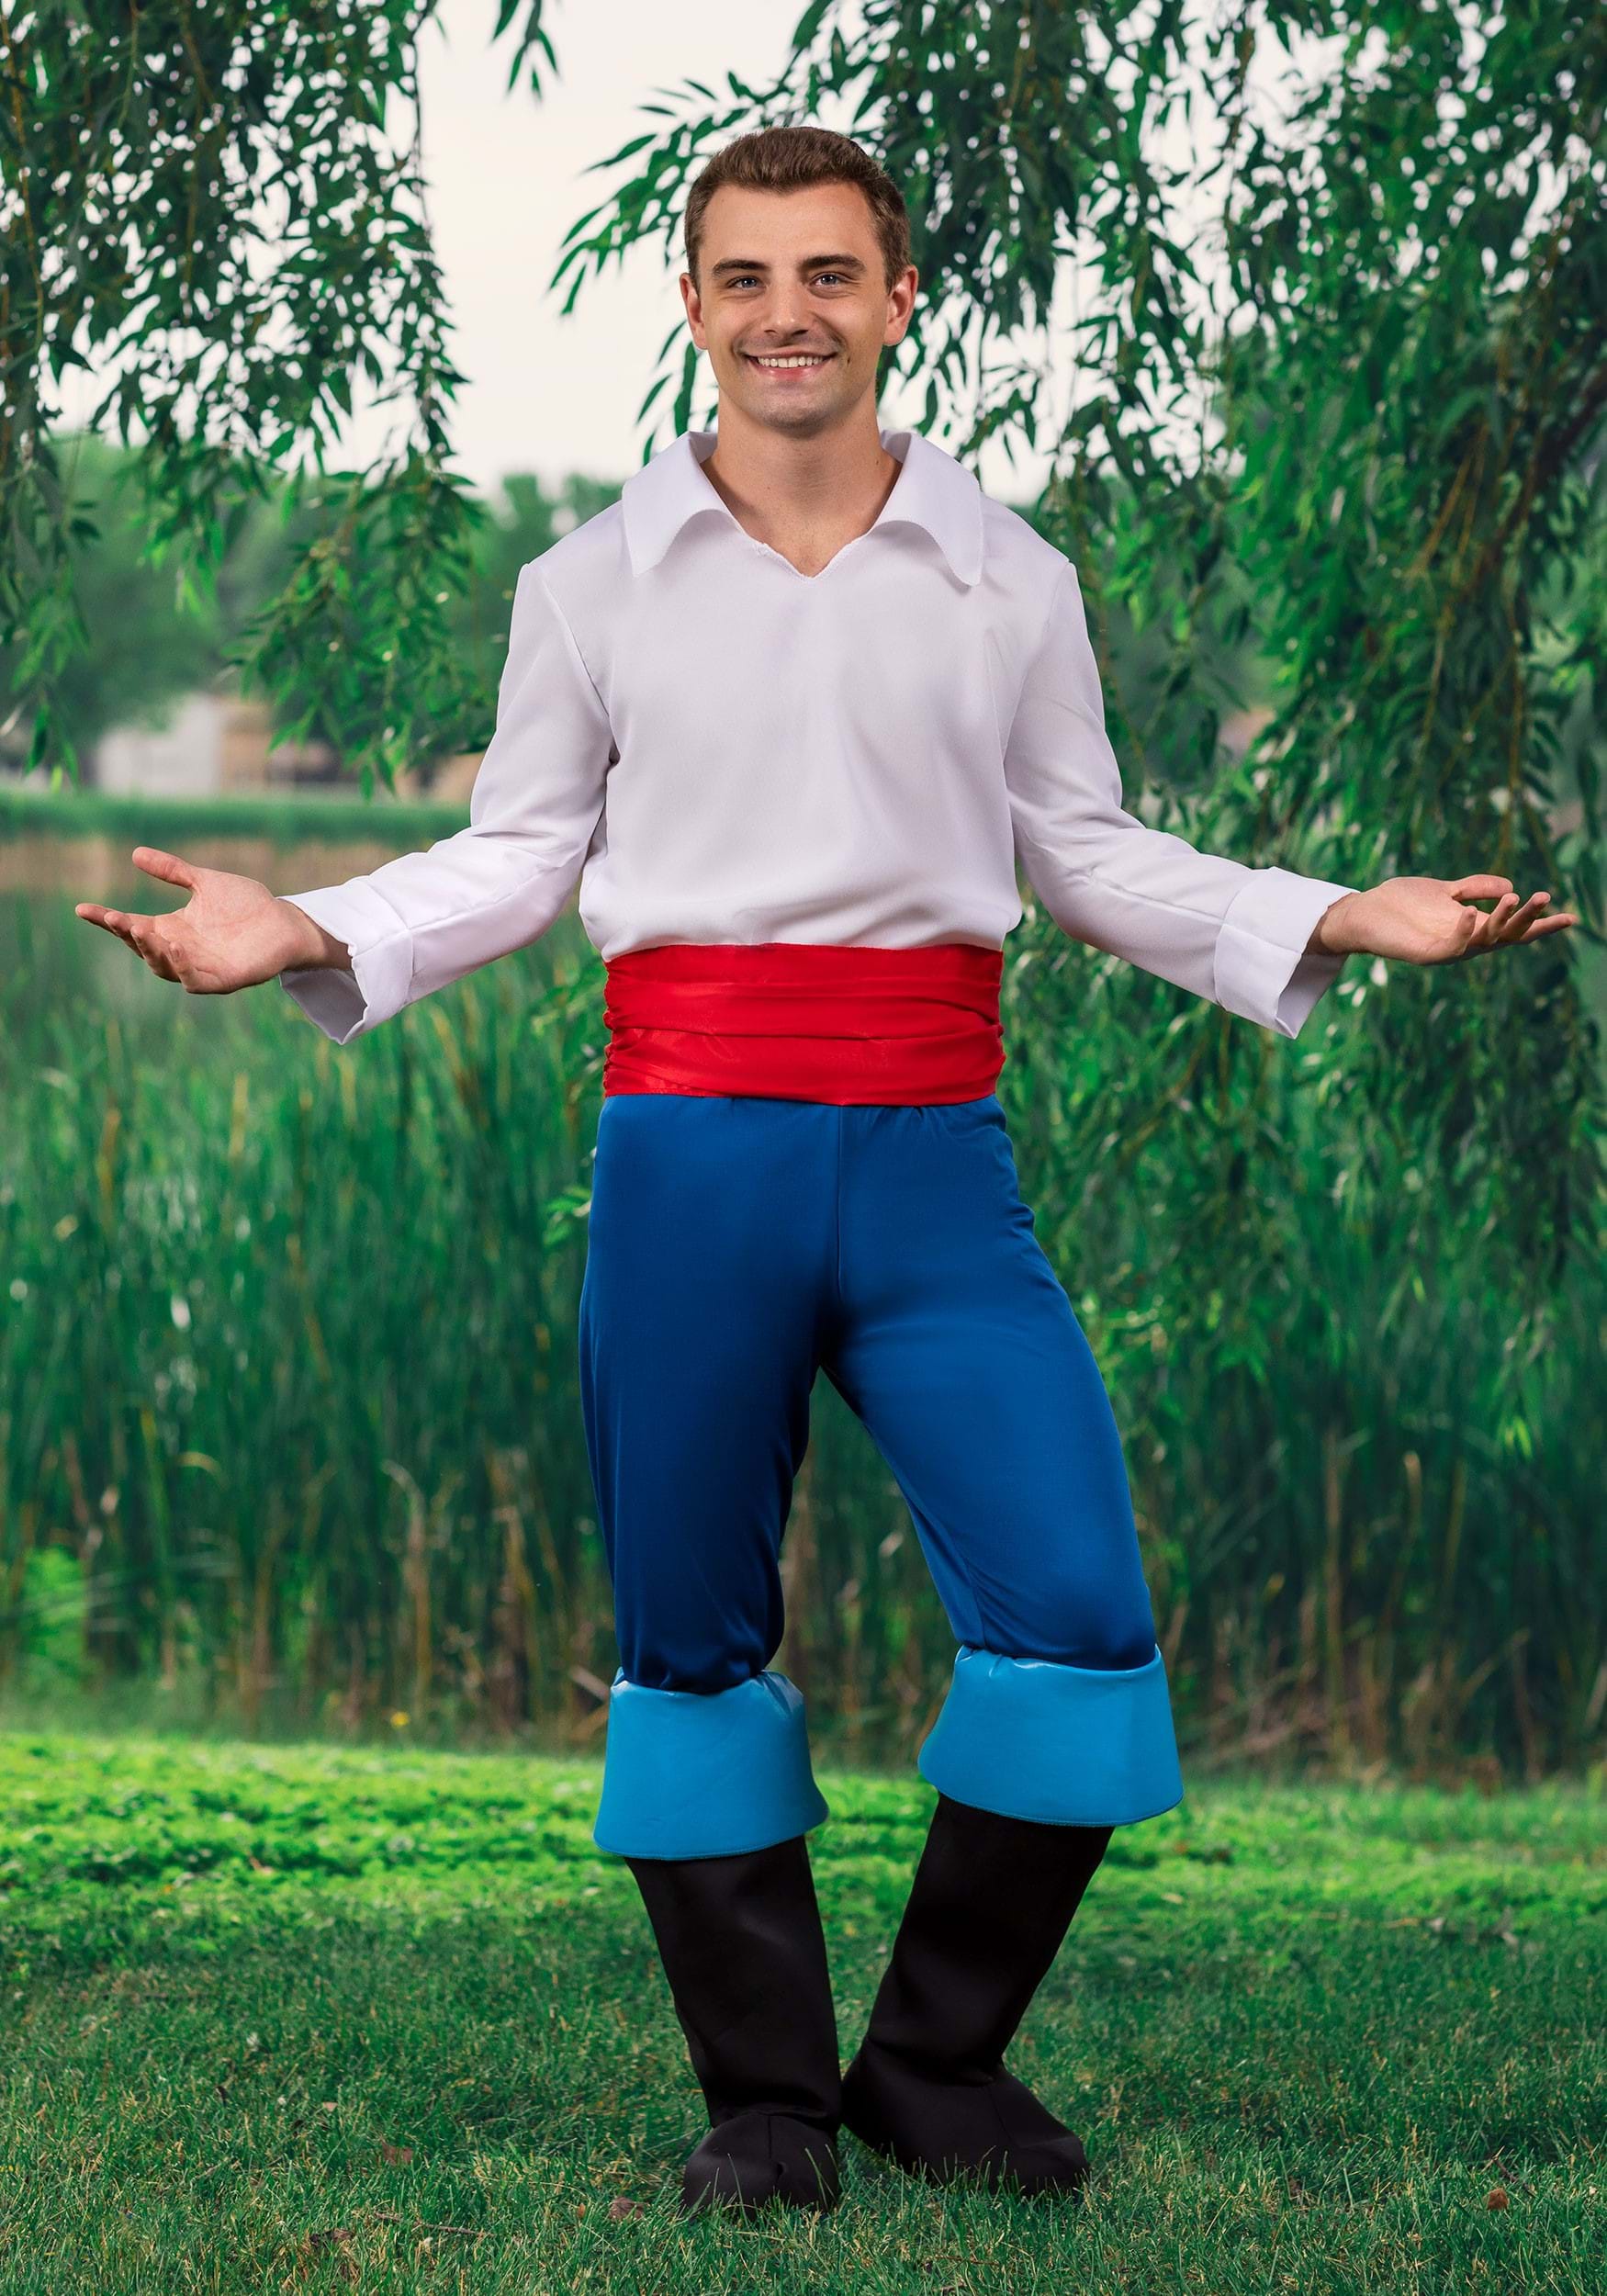 Disney Prince Eric Deluxe Costume for Men